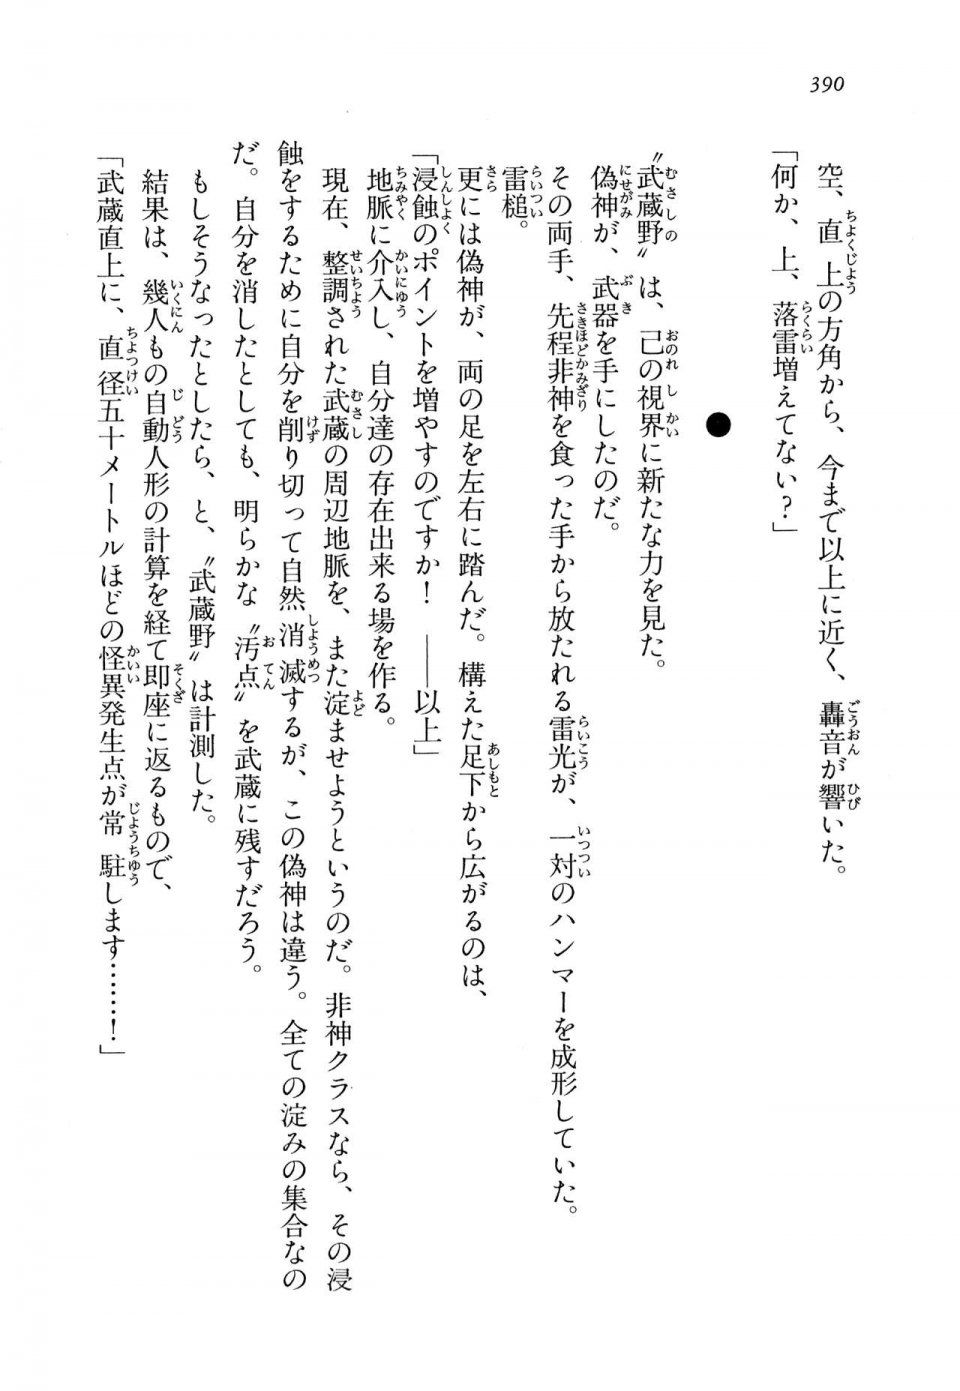 Kyoukai Senjou no Horizon BD Special Mininovel Vol 8(4B) - Photo #394